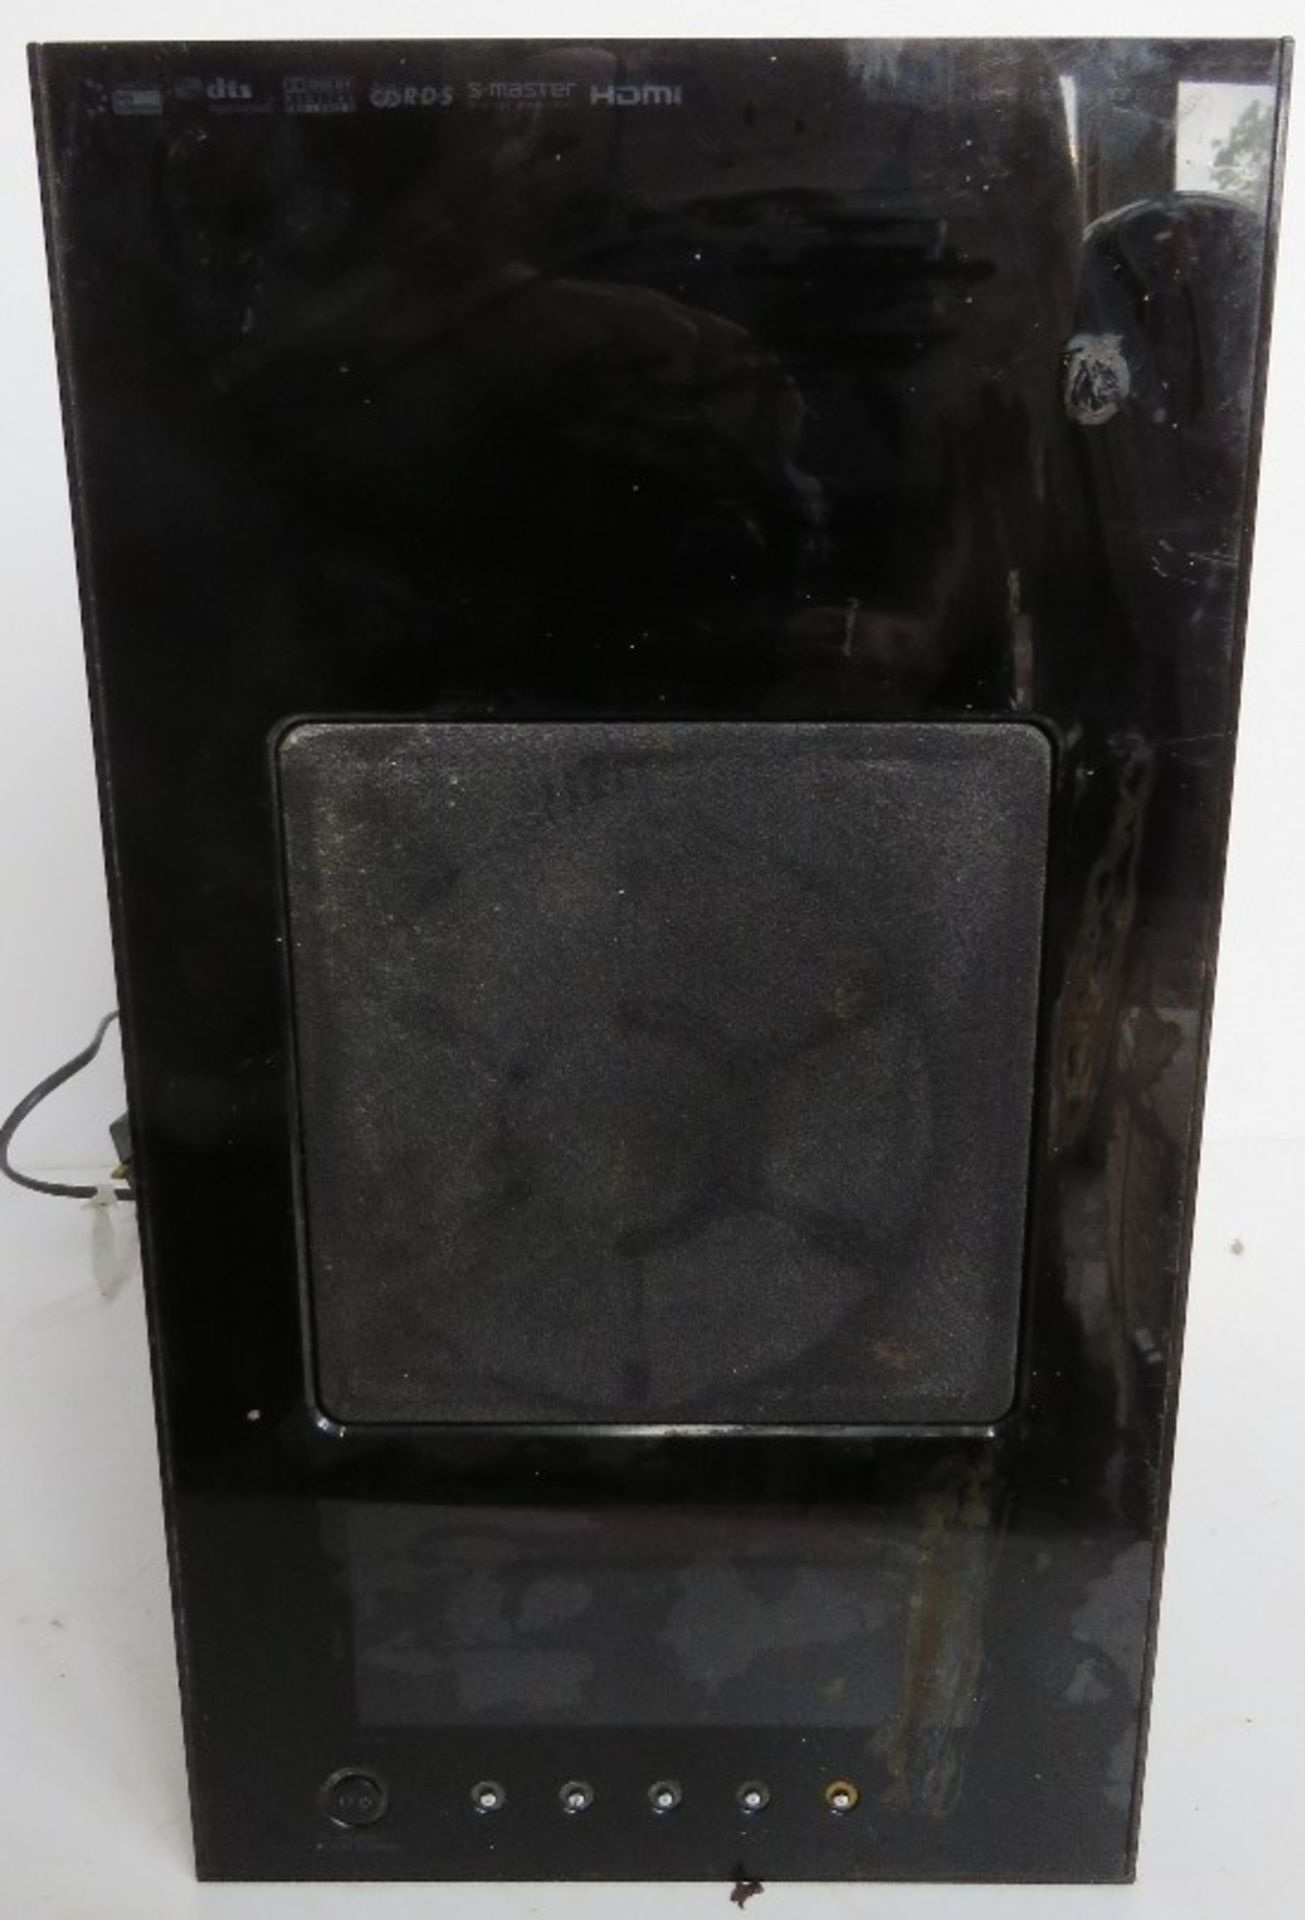 A Sony Satellite sub-woofer speaker. - Image 2 of 3